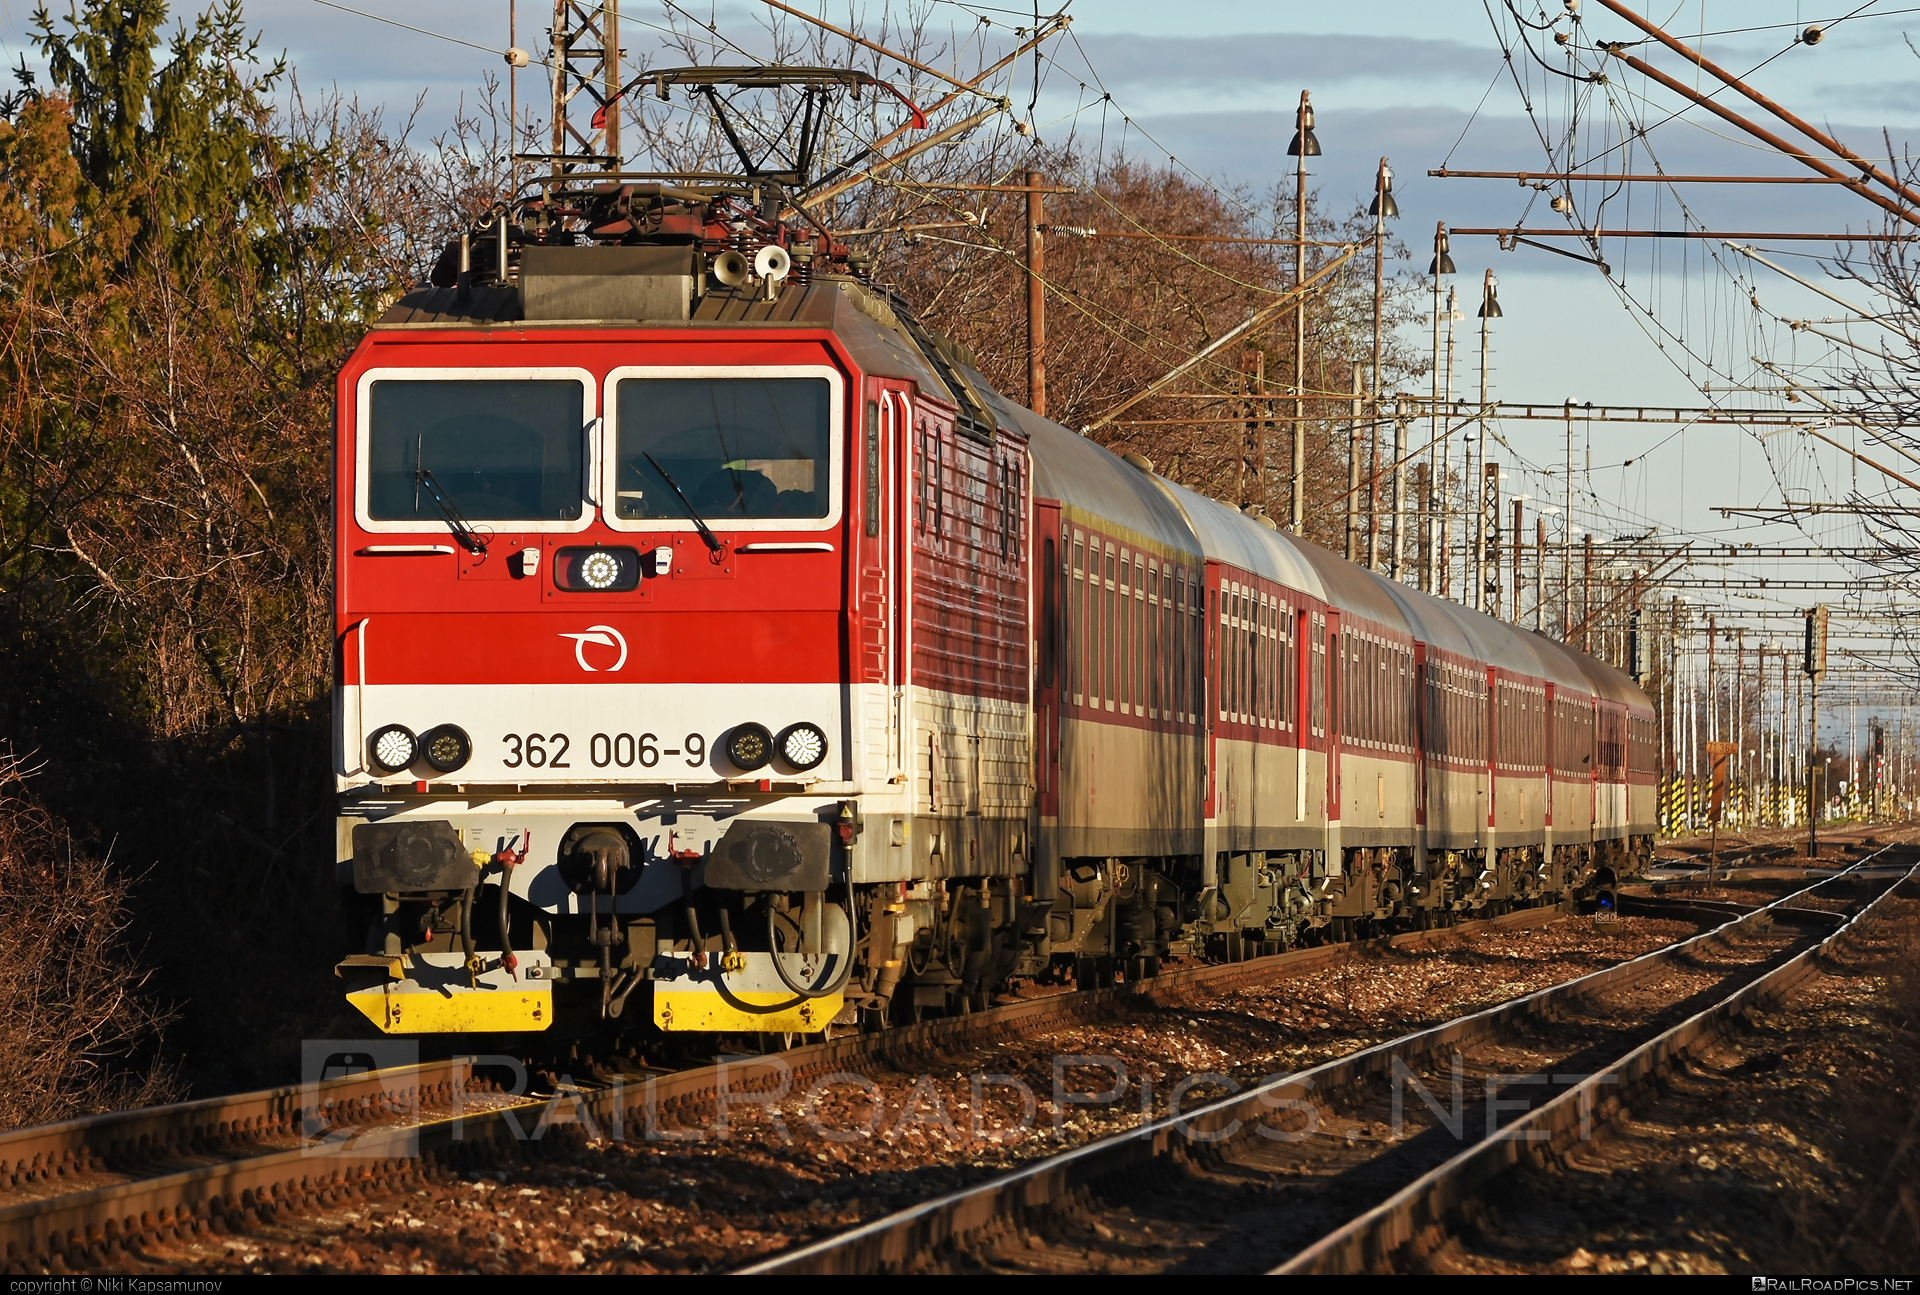 Škoda 69Er - 362 006-9 operated by Železničná Spoločnost' Slovensko, a.s. #ZeleznicnaSpolocnostSlovensko #eso #locomotive362 #rychleeso #skoda #skoda69er #urpin #zssk